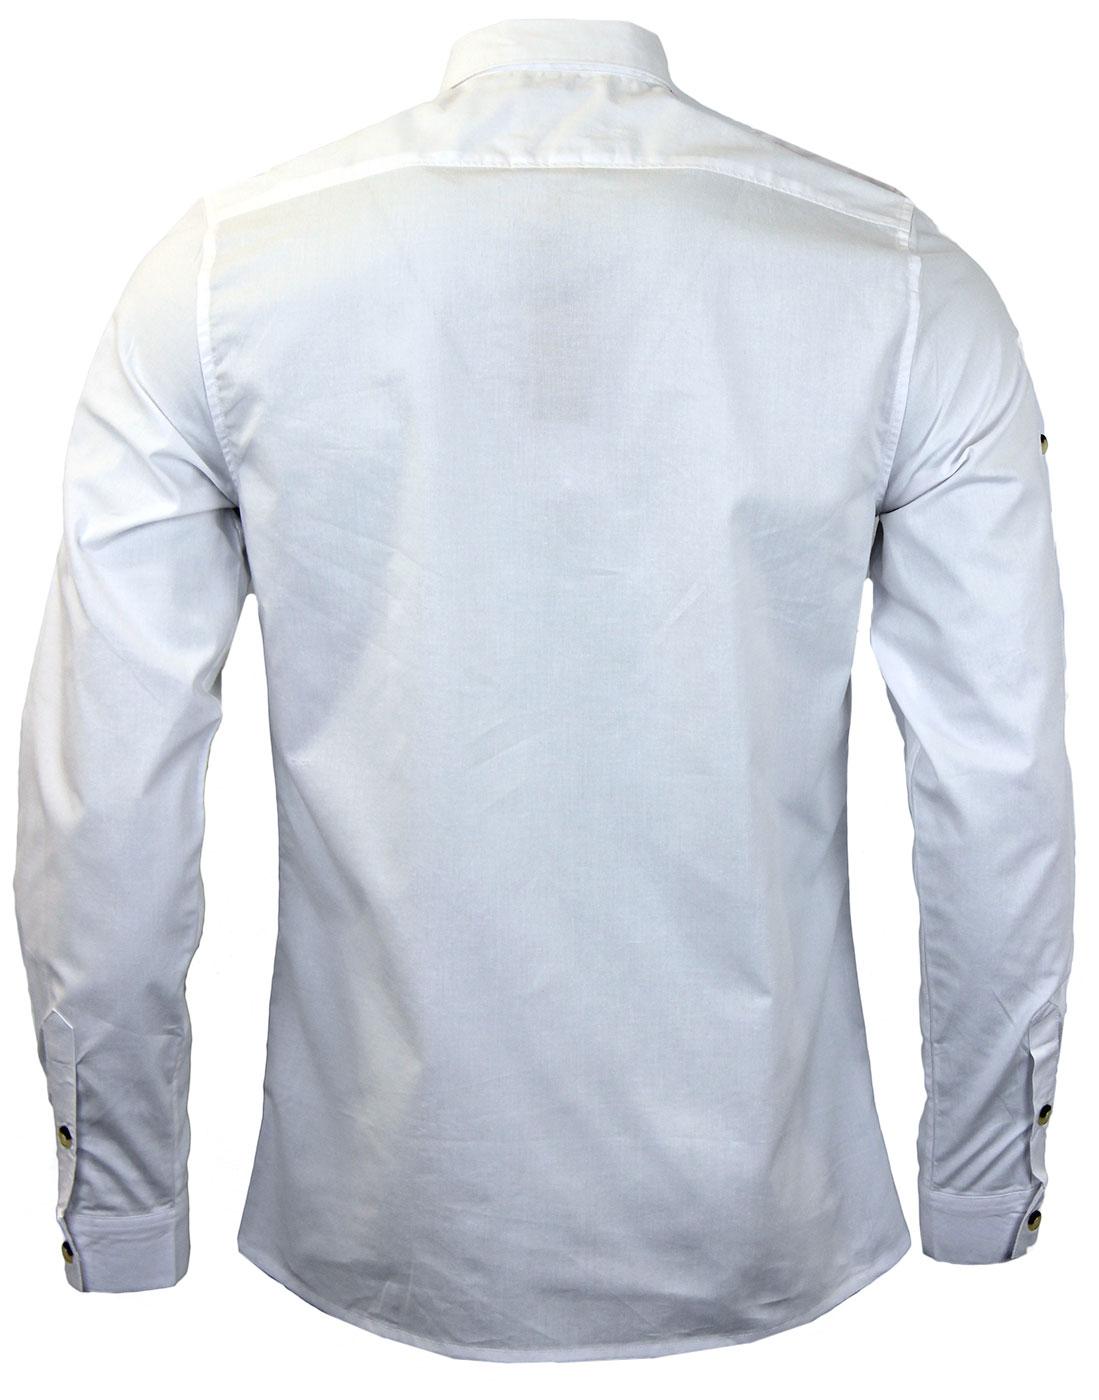 REALM & EMPIRE Wittering Retro Mod Demob Military Epaulet Shirt